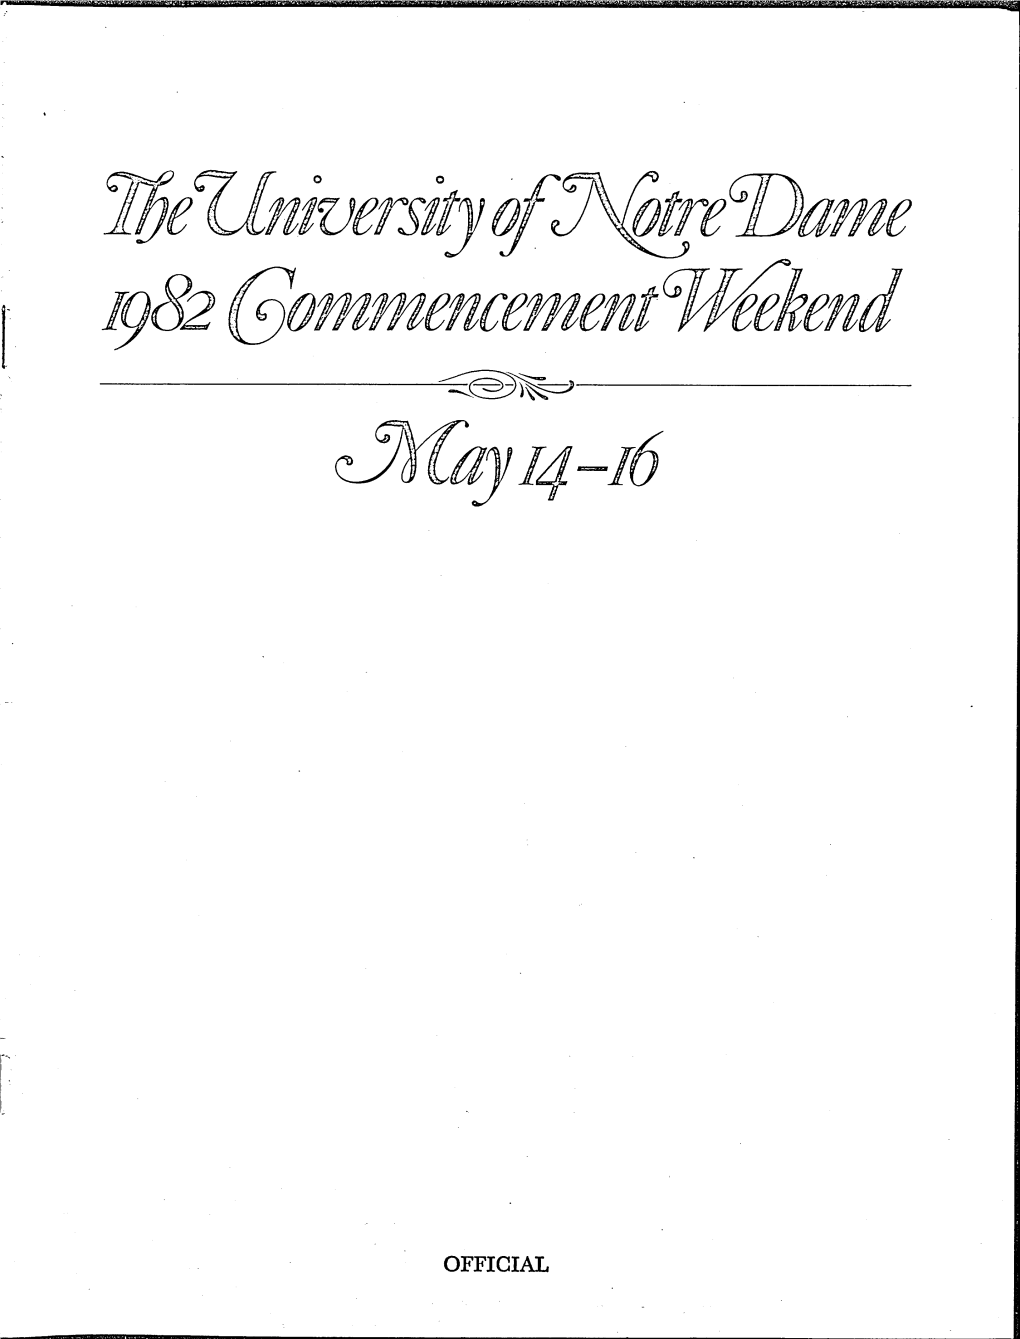 1982-05-17 University of Notre Dame Commencement Program